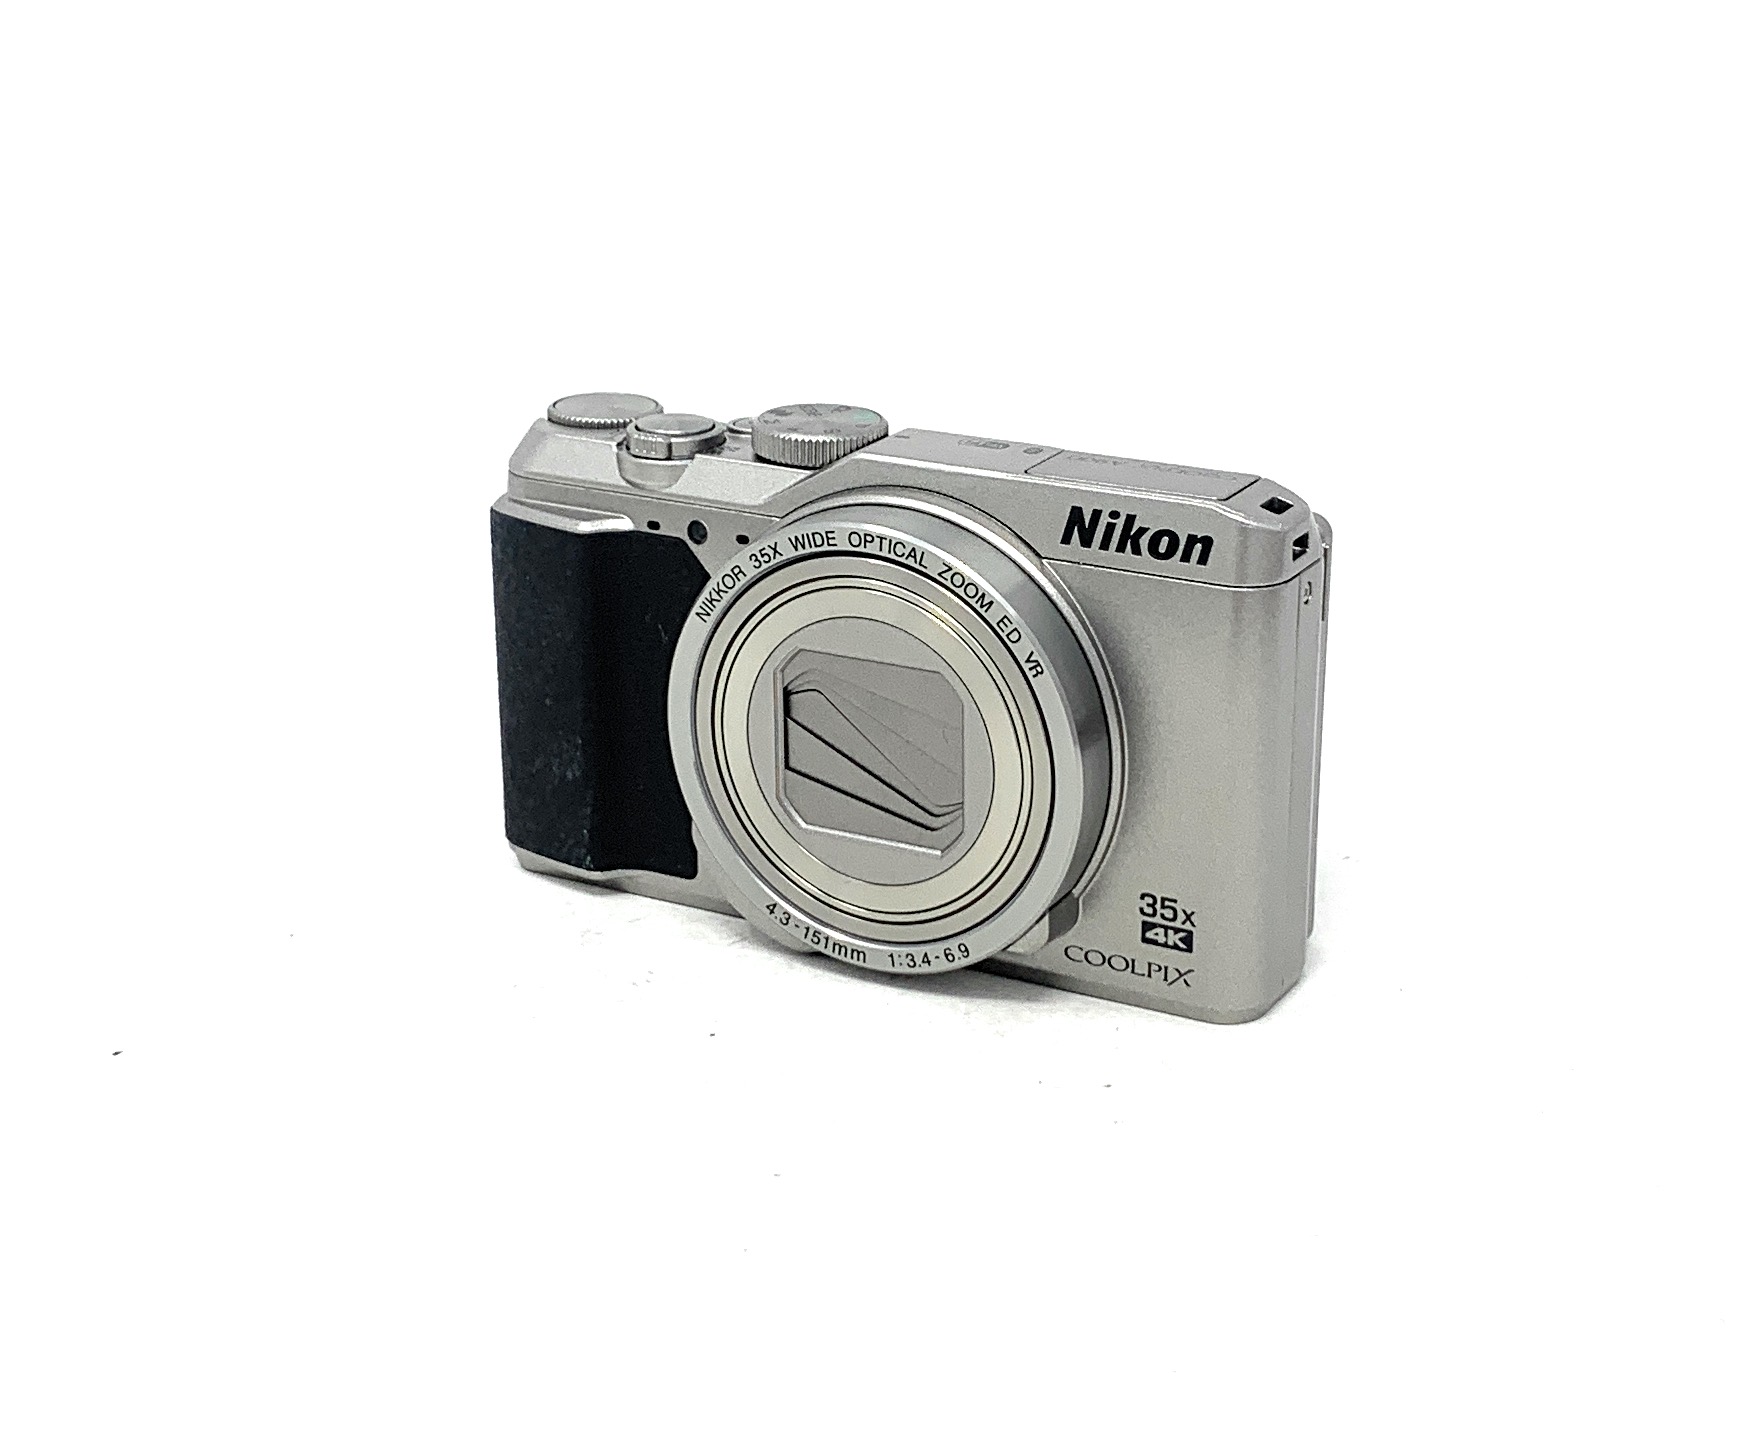 Nikon A900 Coolpix Compact Camera – Silver – Buy Any Tech